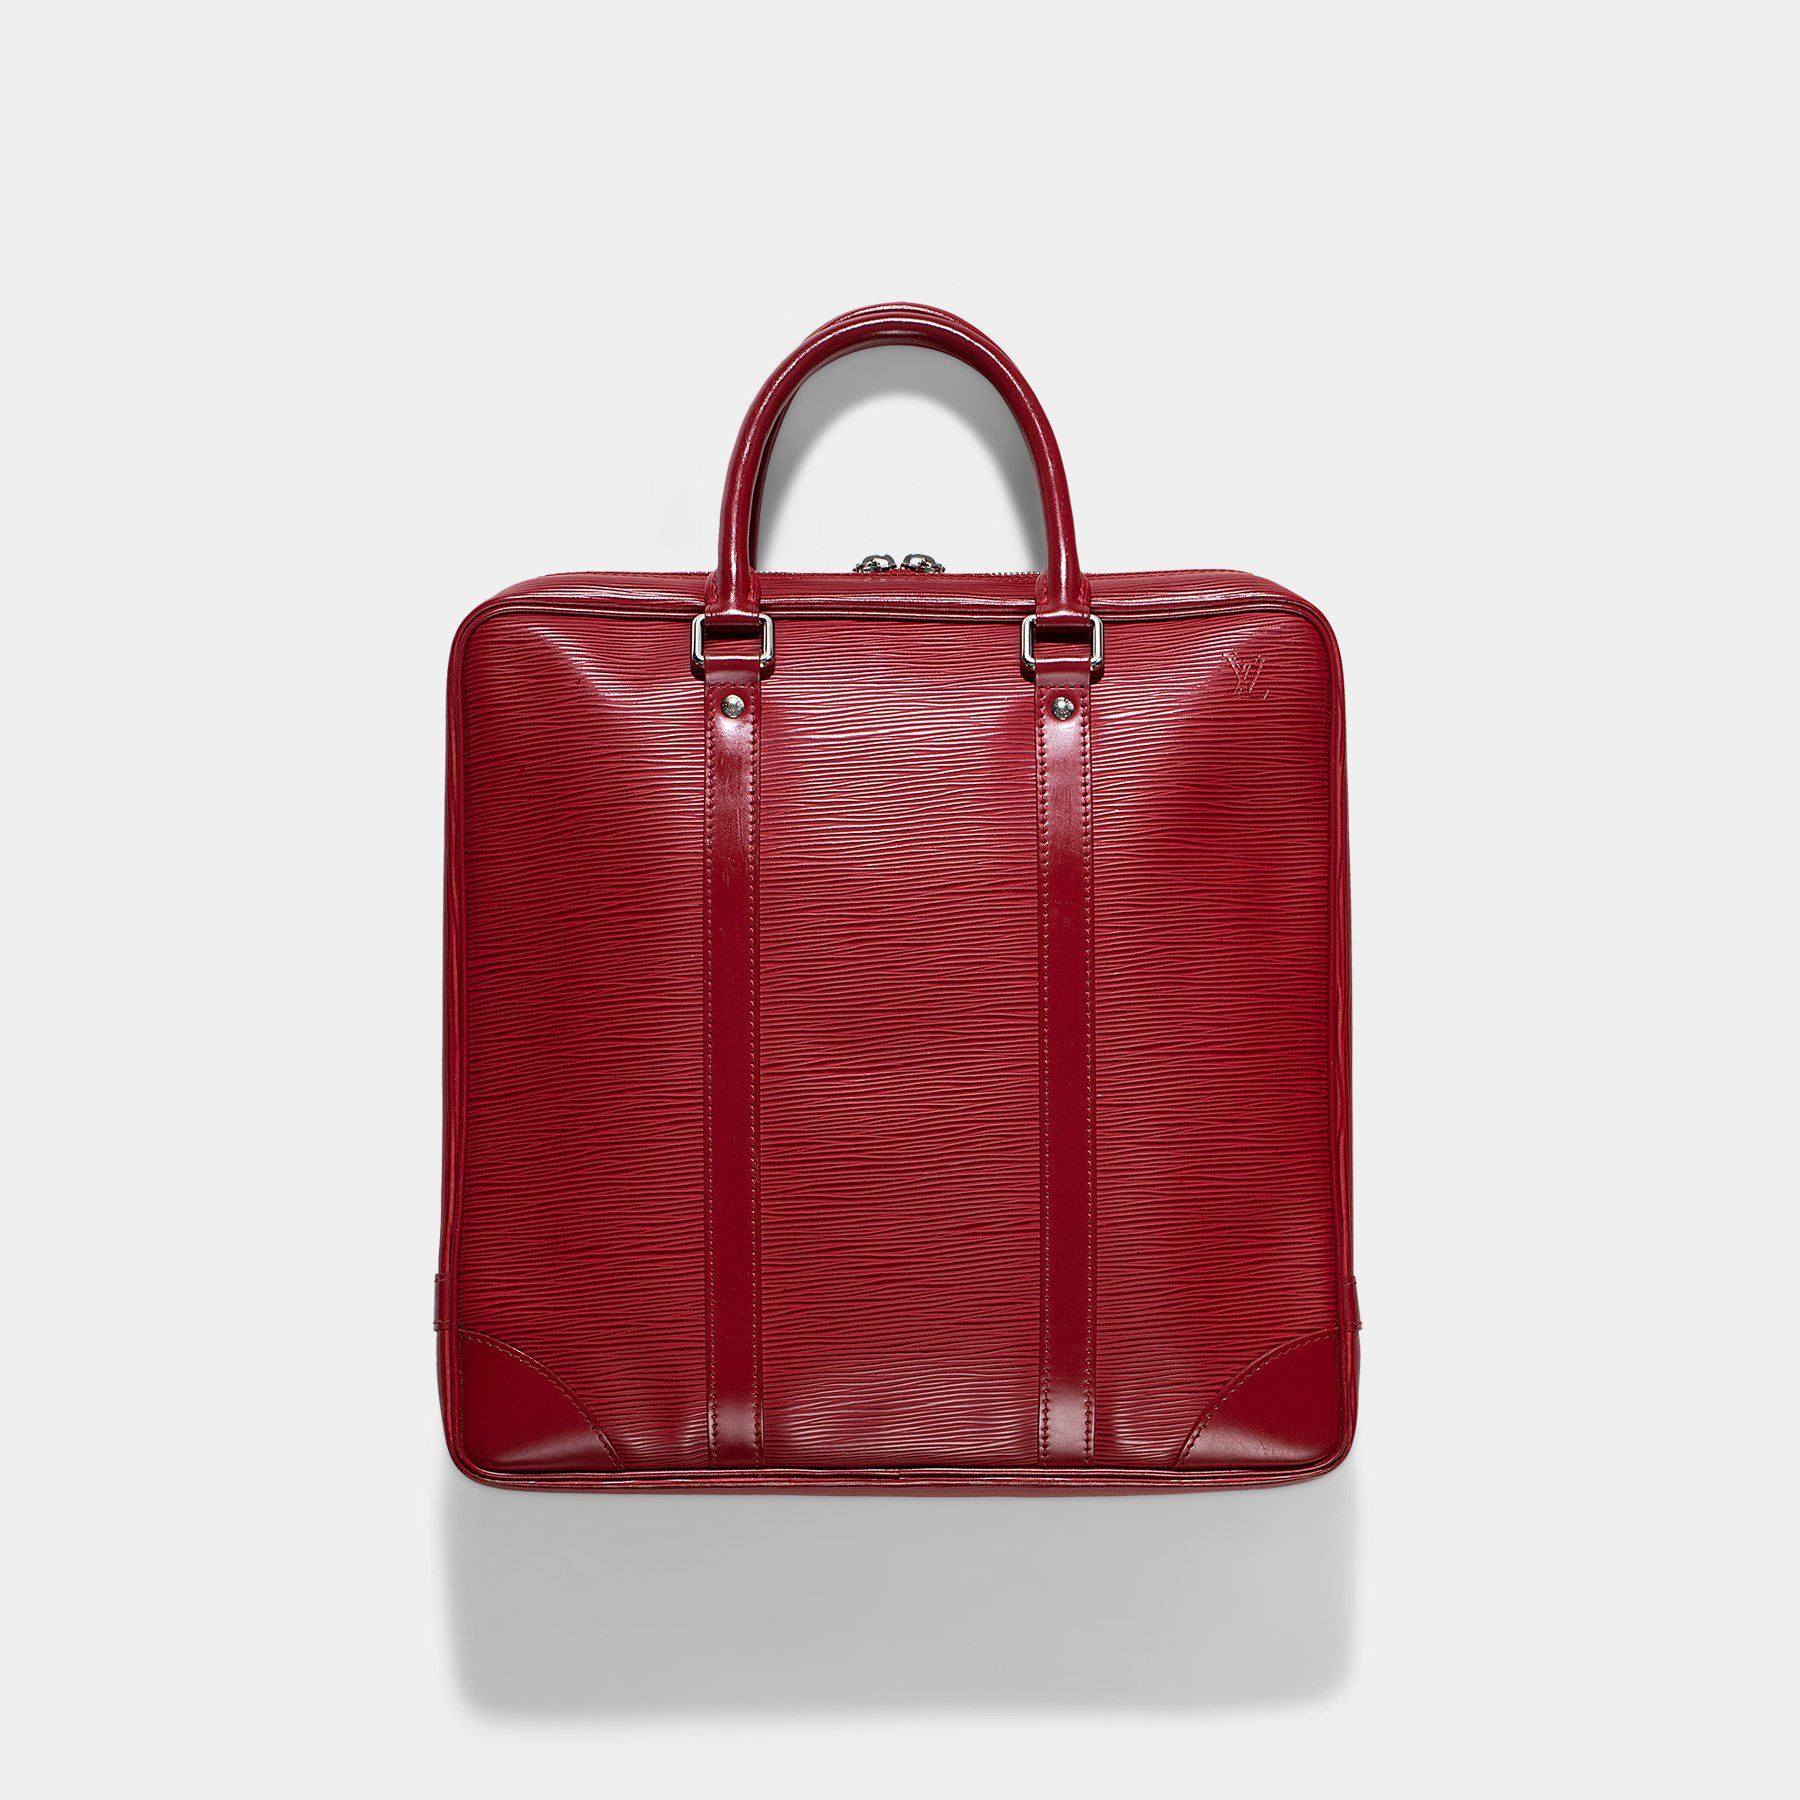 How I Got This Louis Vuitton Business Bag DIRT CHEAP 